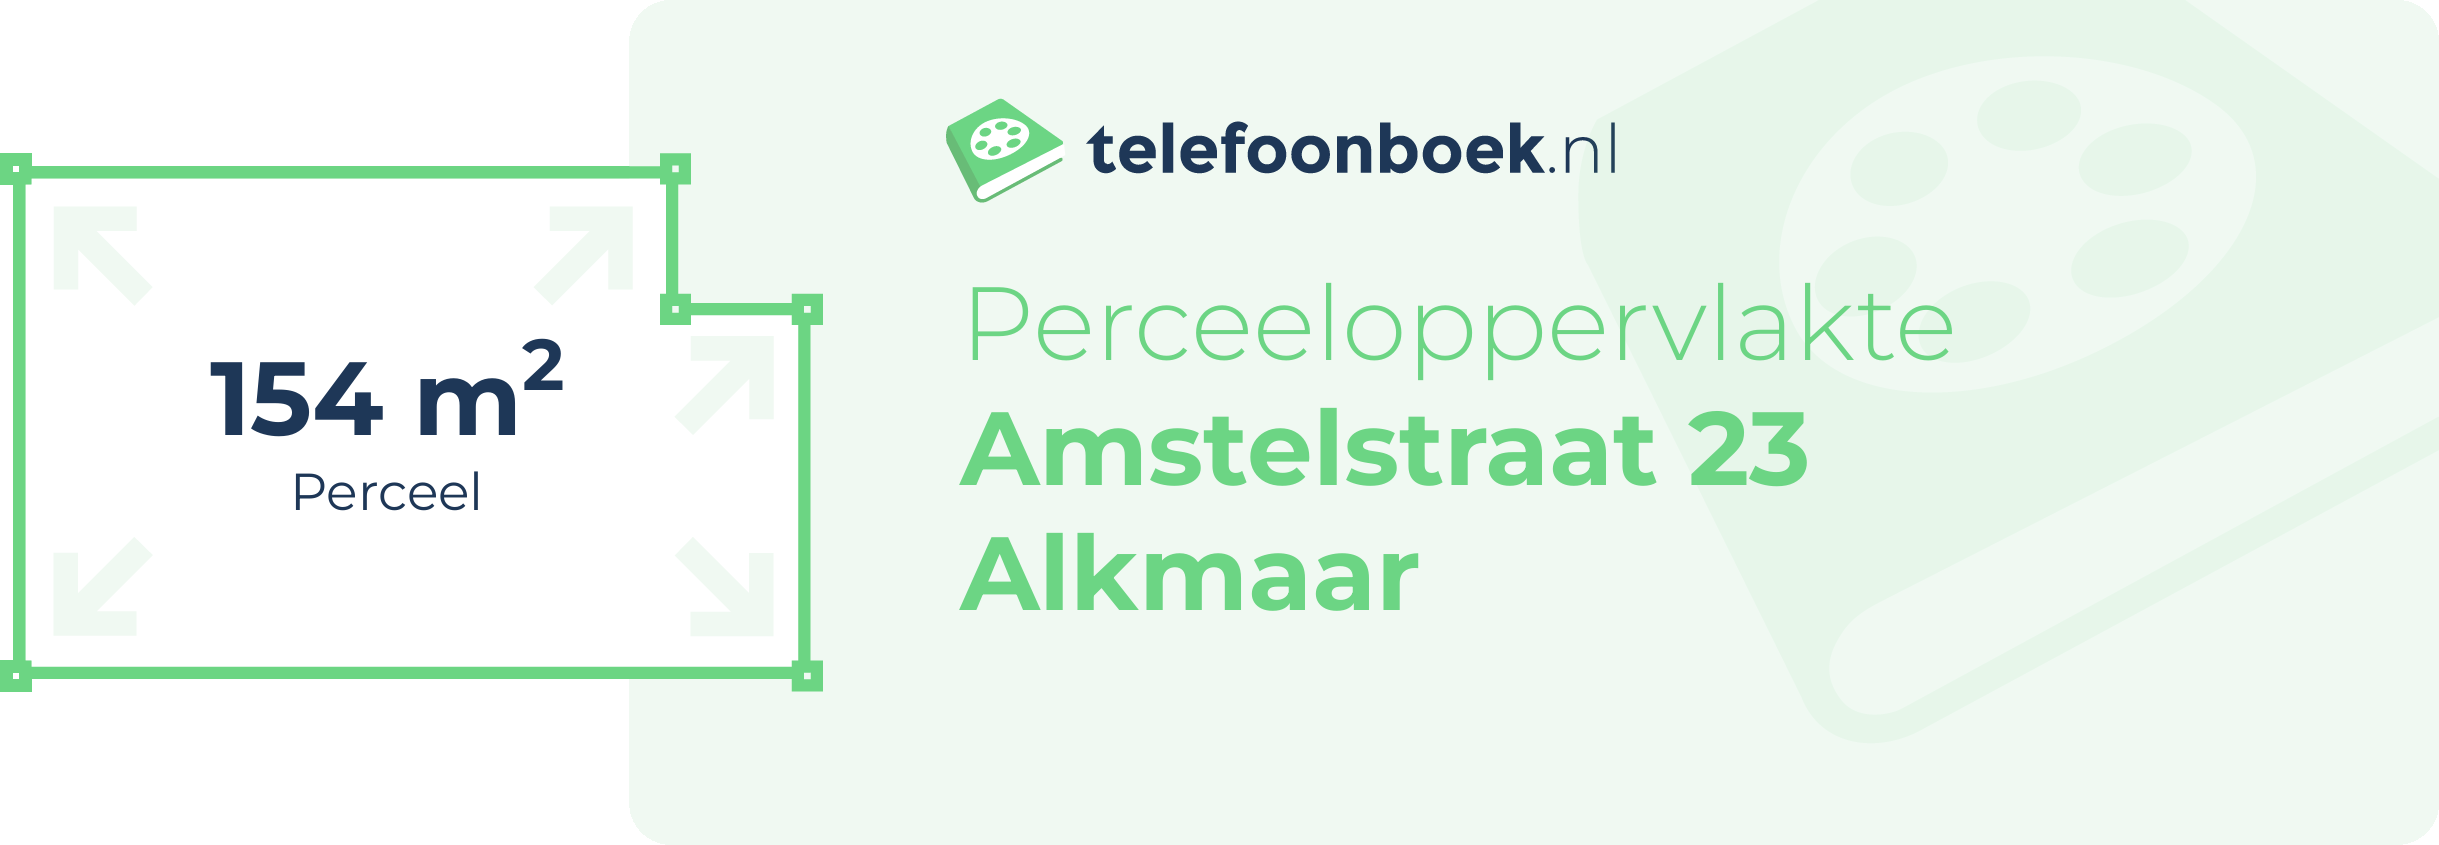 Perceeloppervlakte Amstelstraat 23 Alkmaar